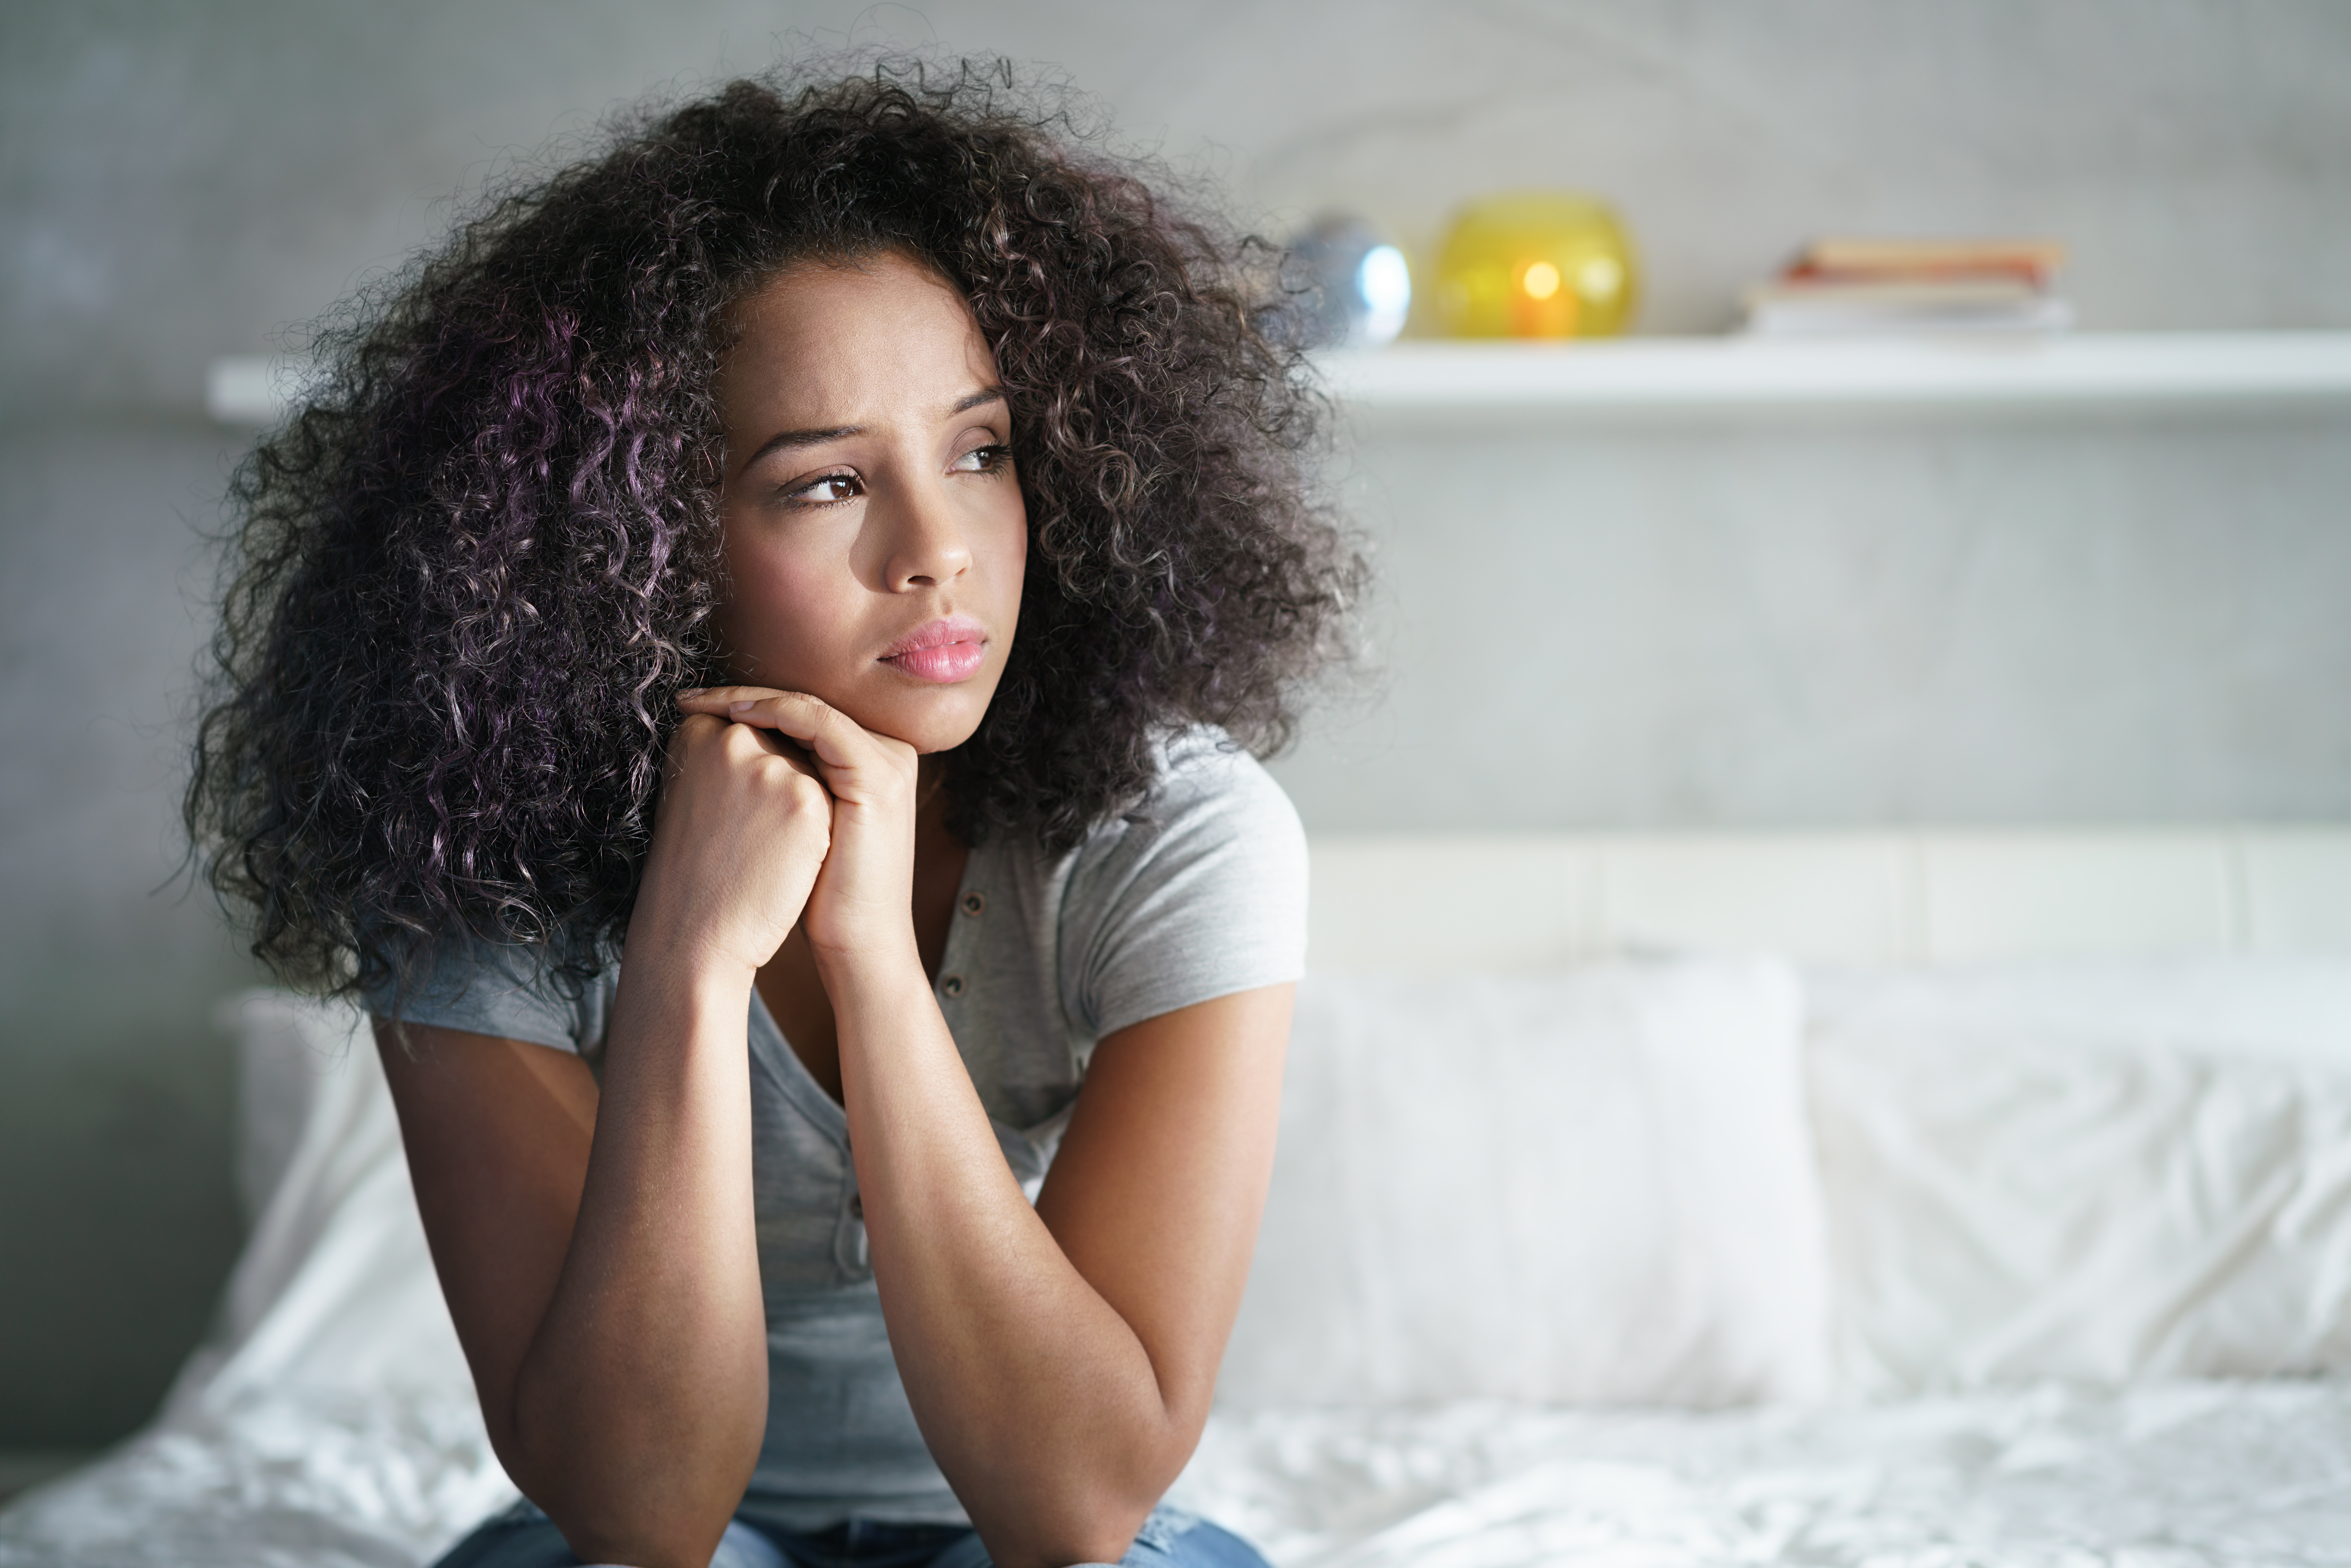 A depressed black woman | Source: Shutterstock